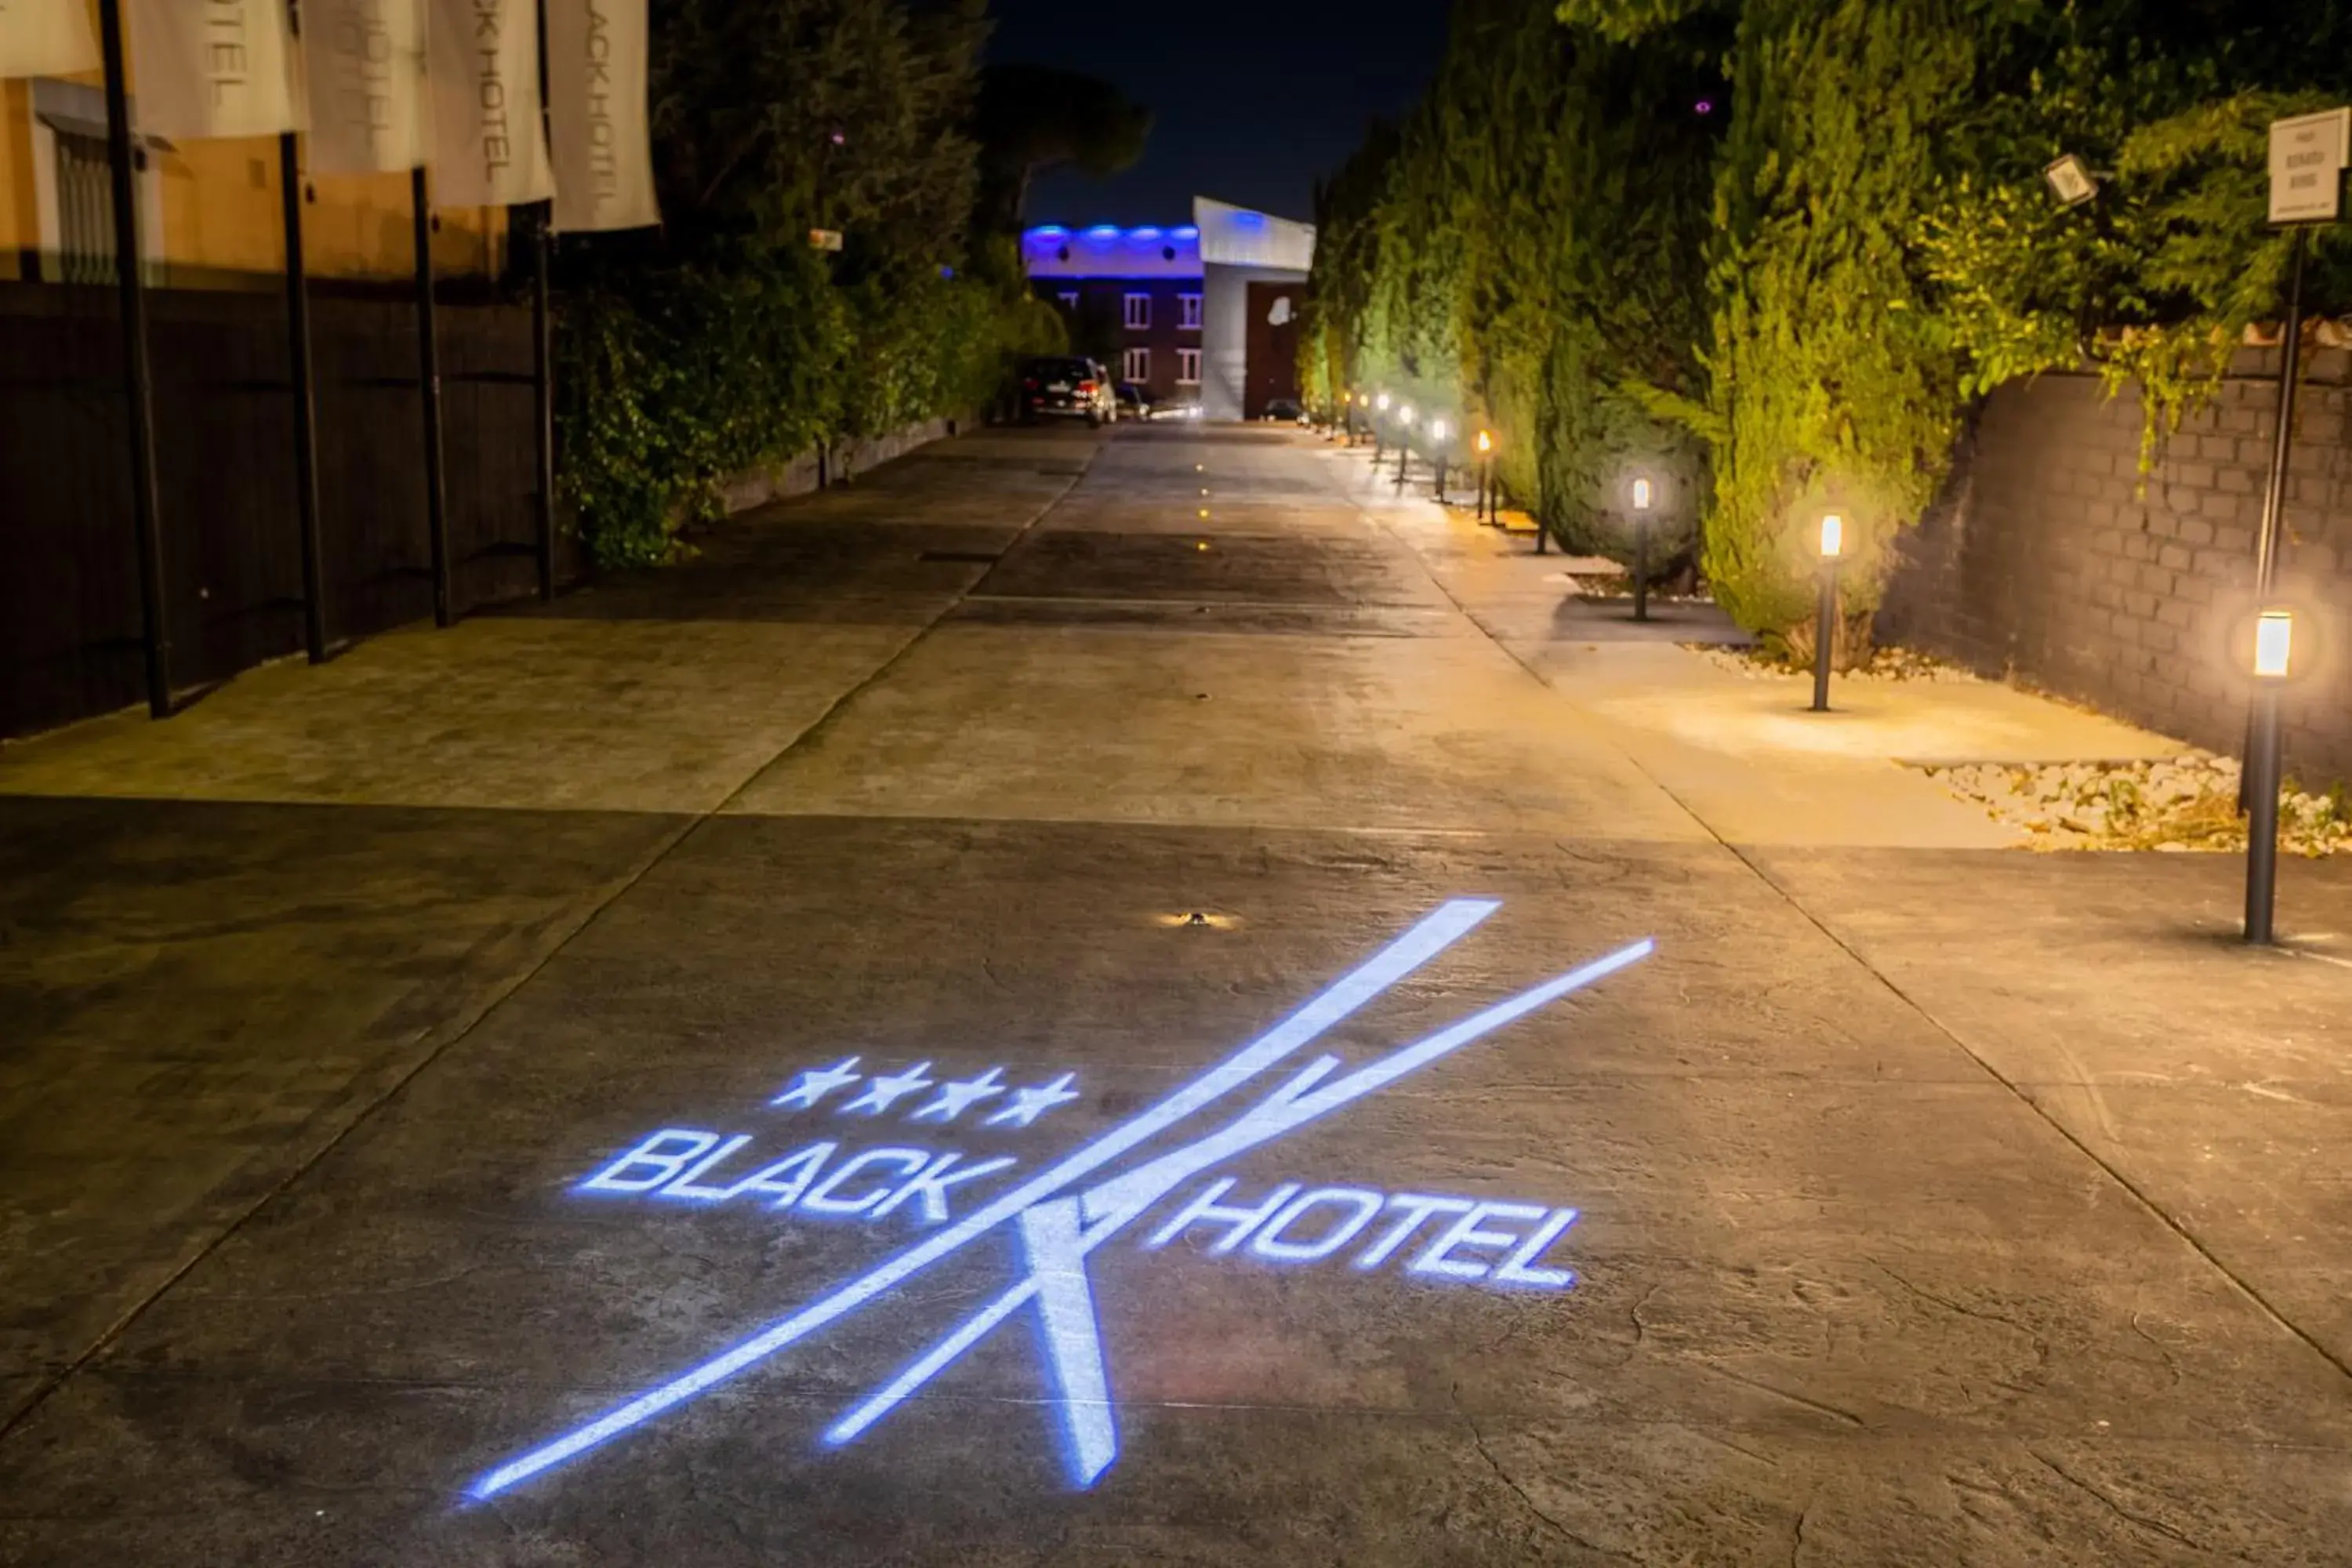 Night in Black Hotel